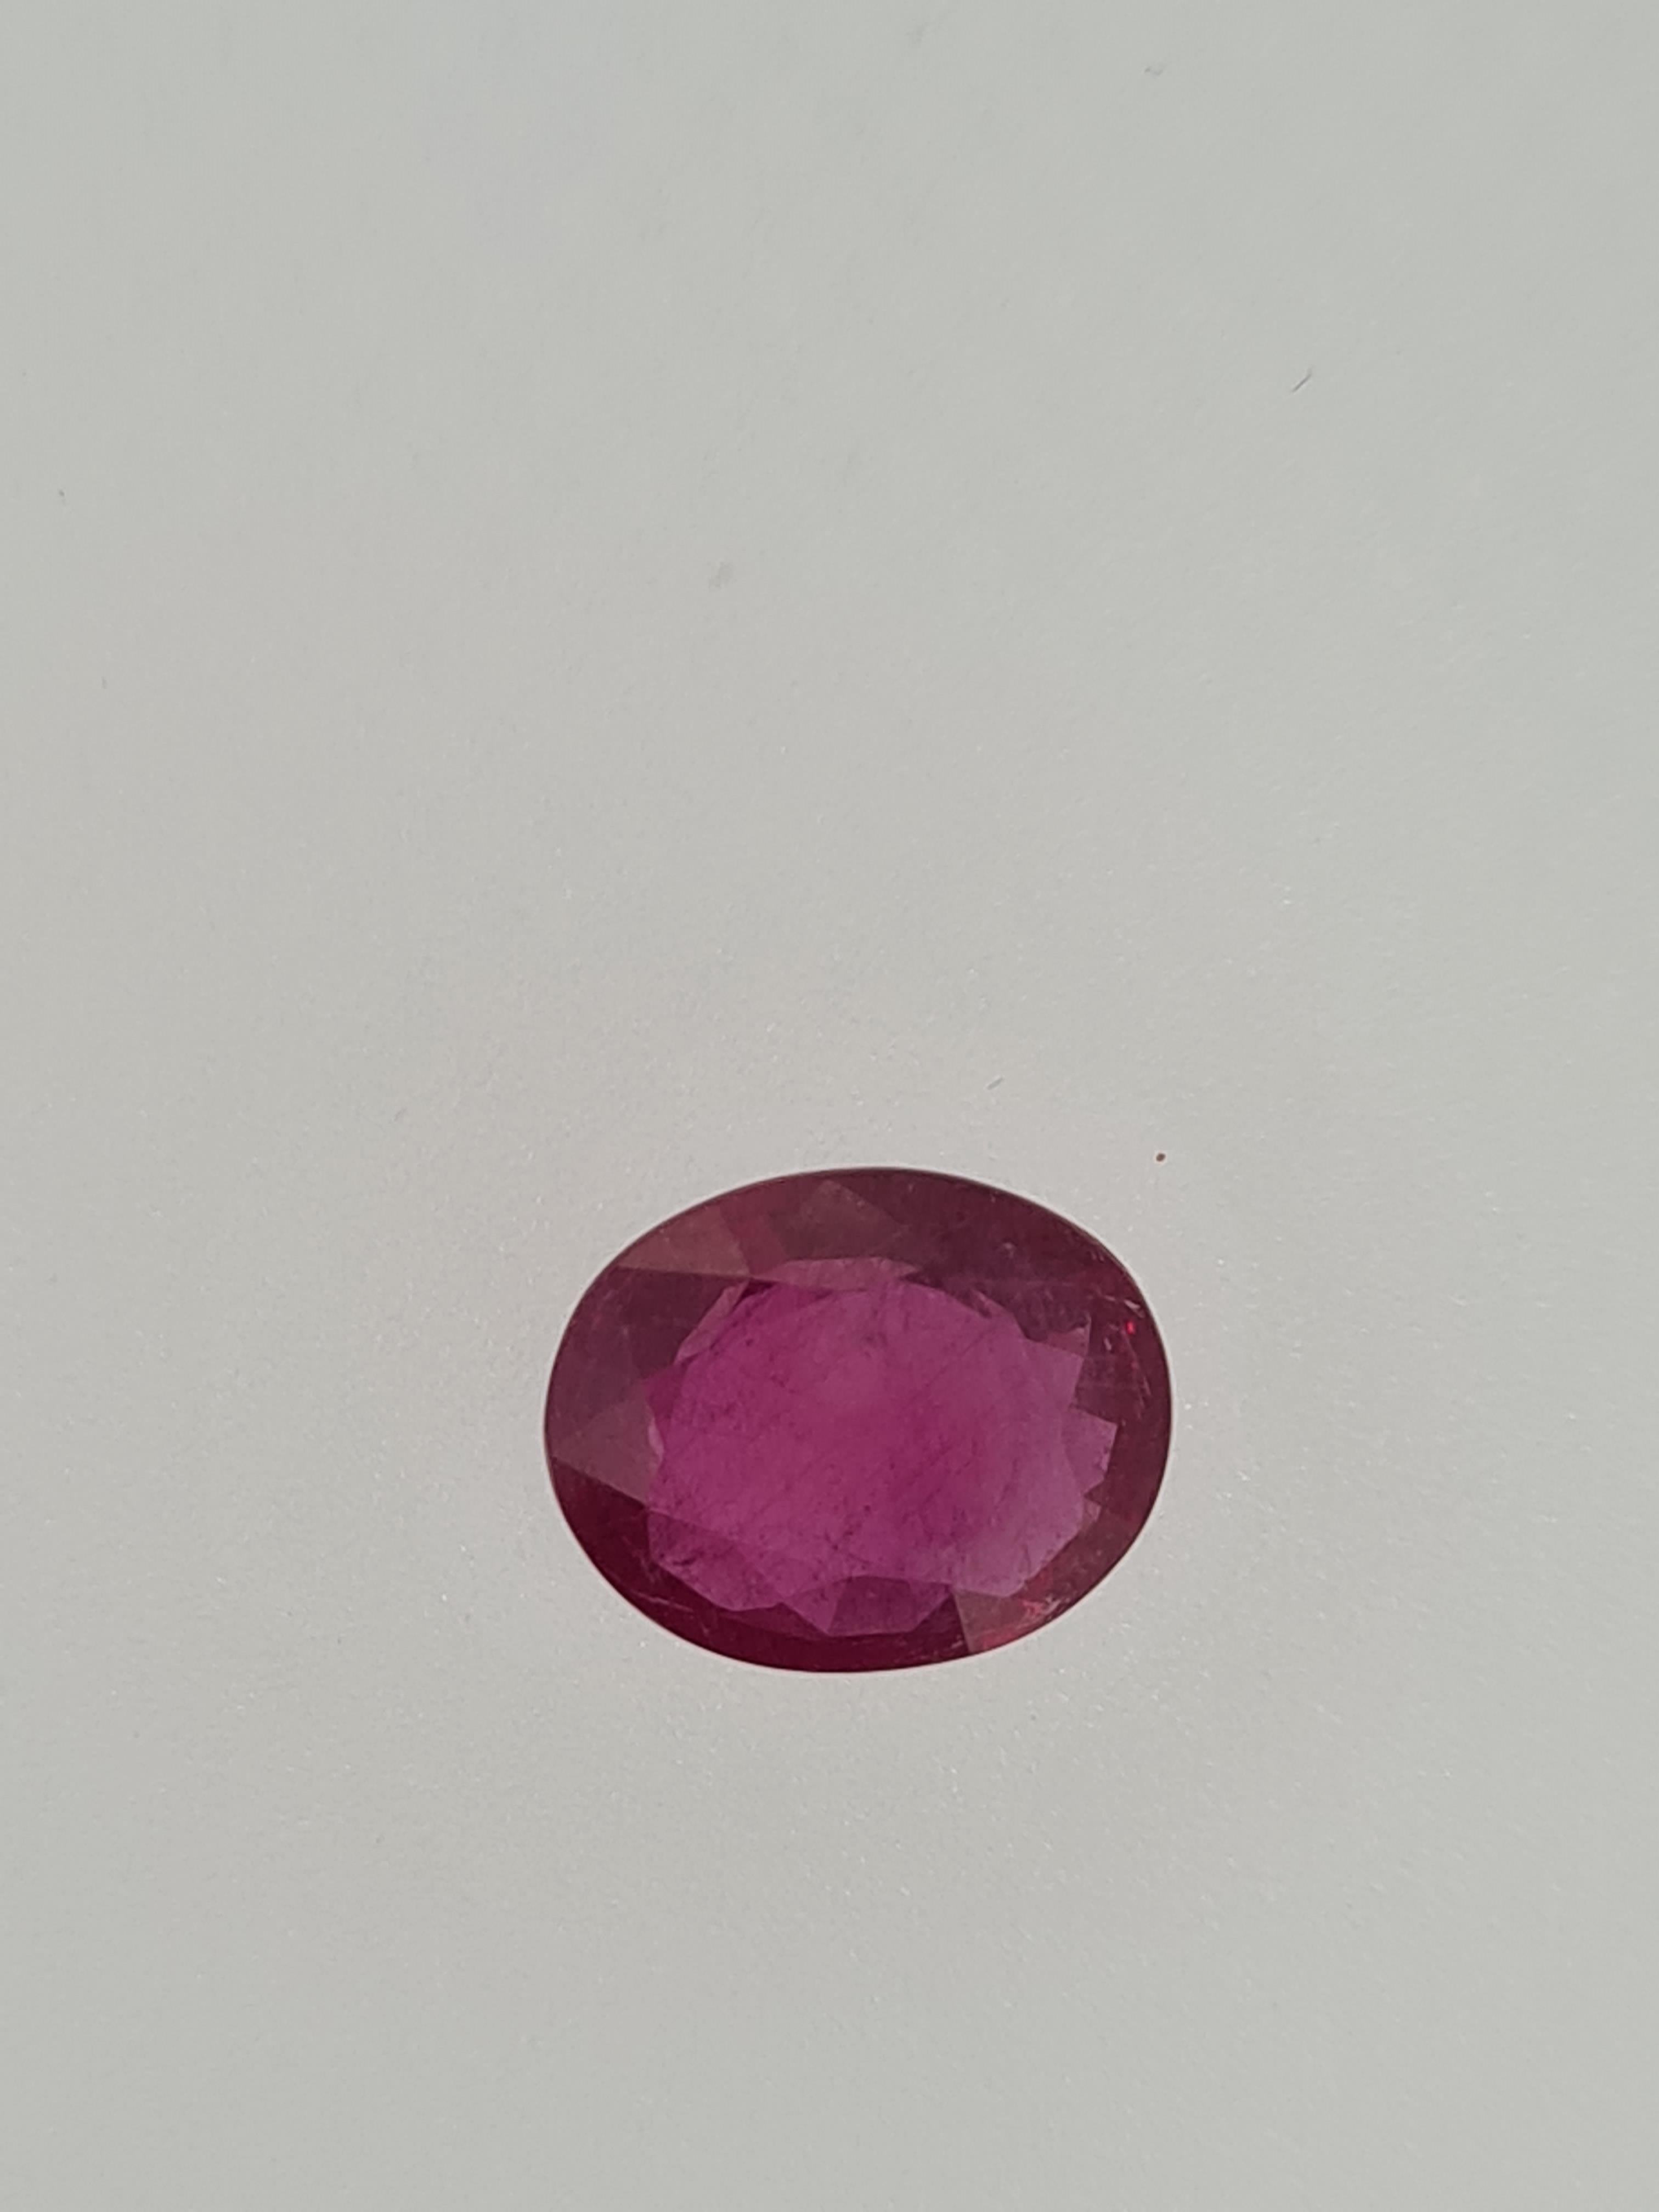 Ruby oval cut gem stone - Image 7 of 7